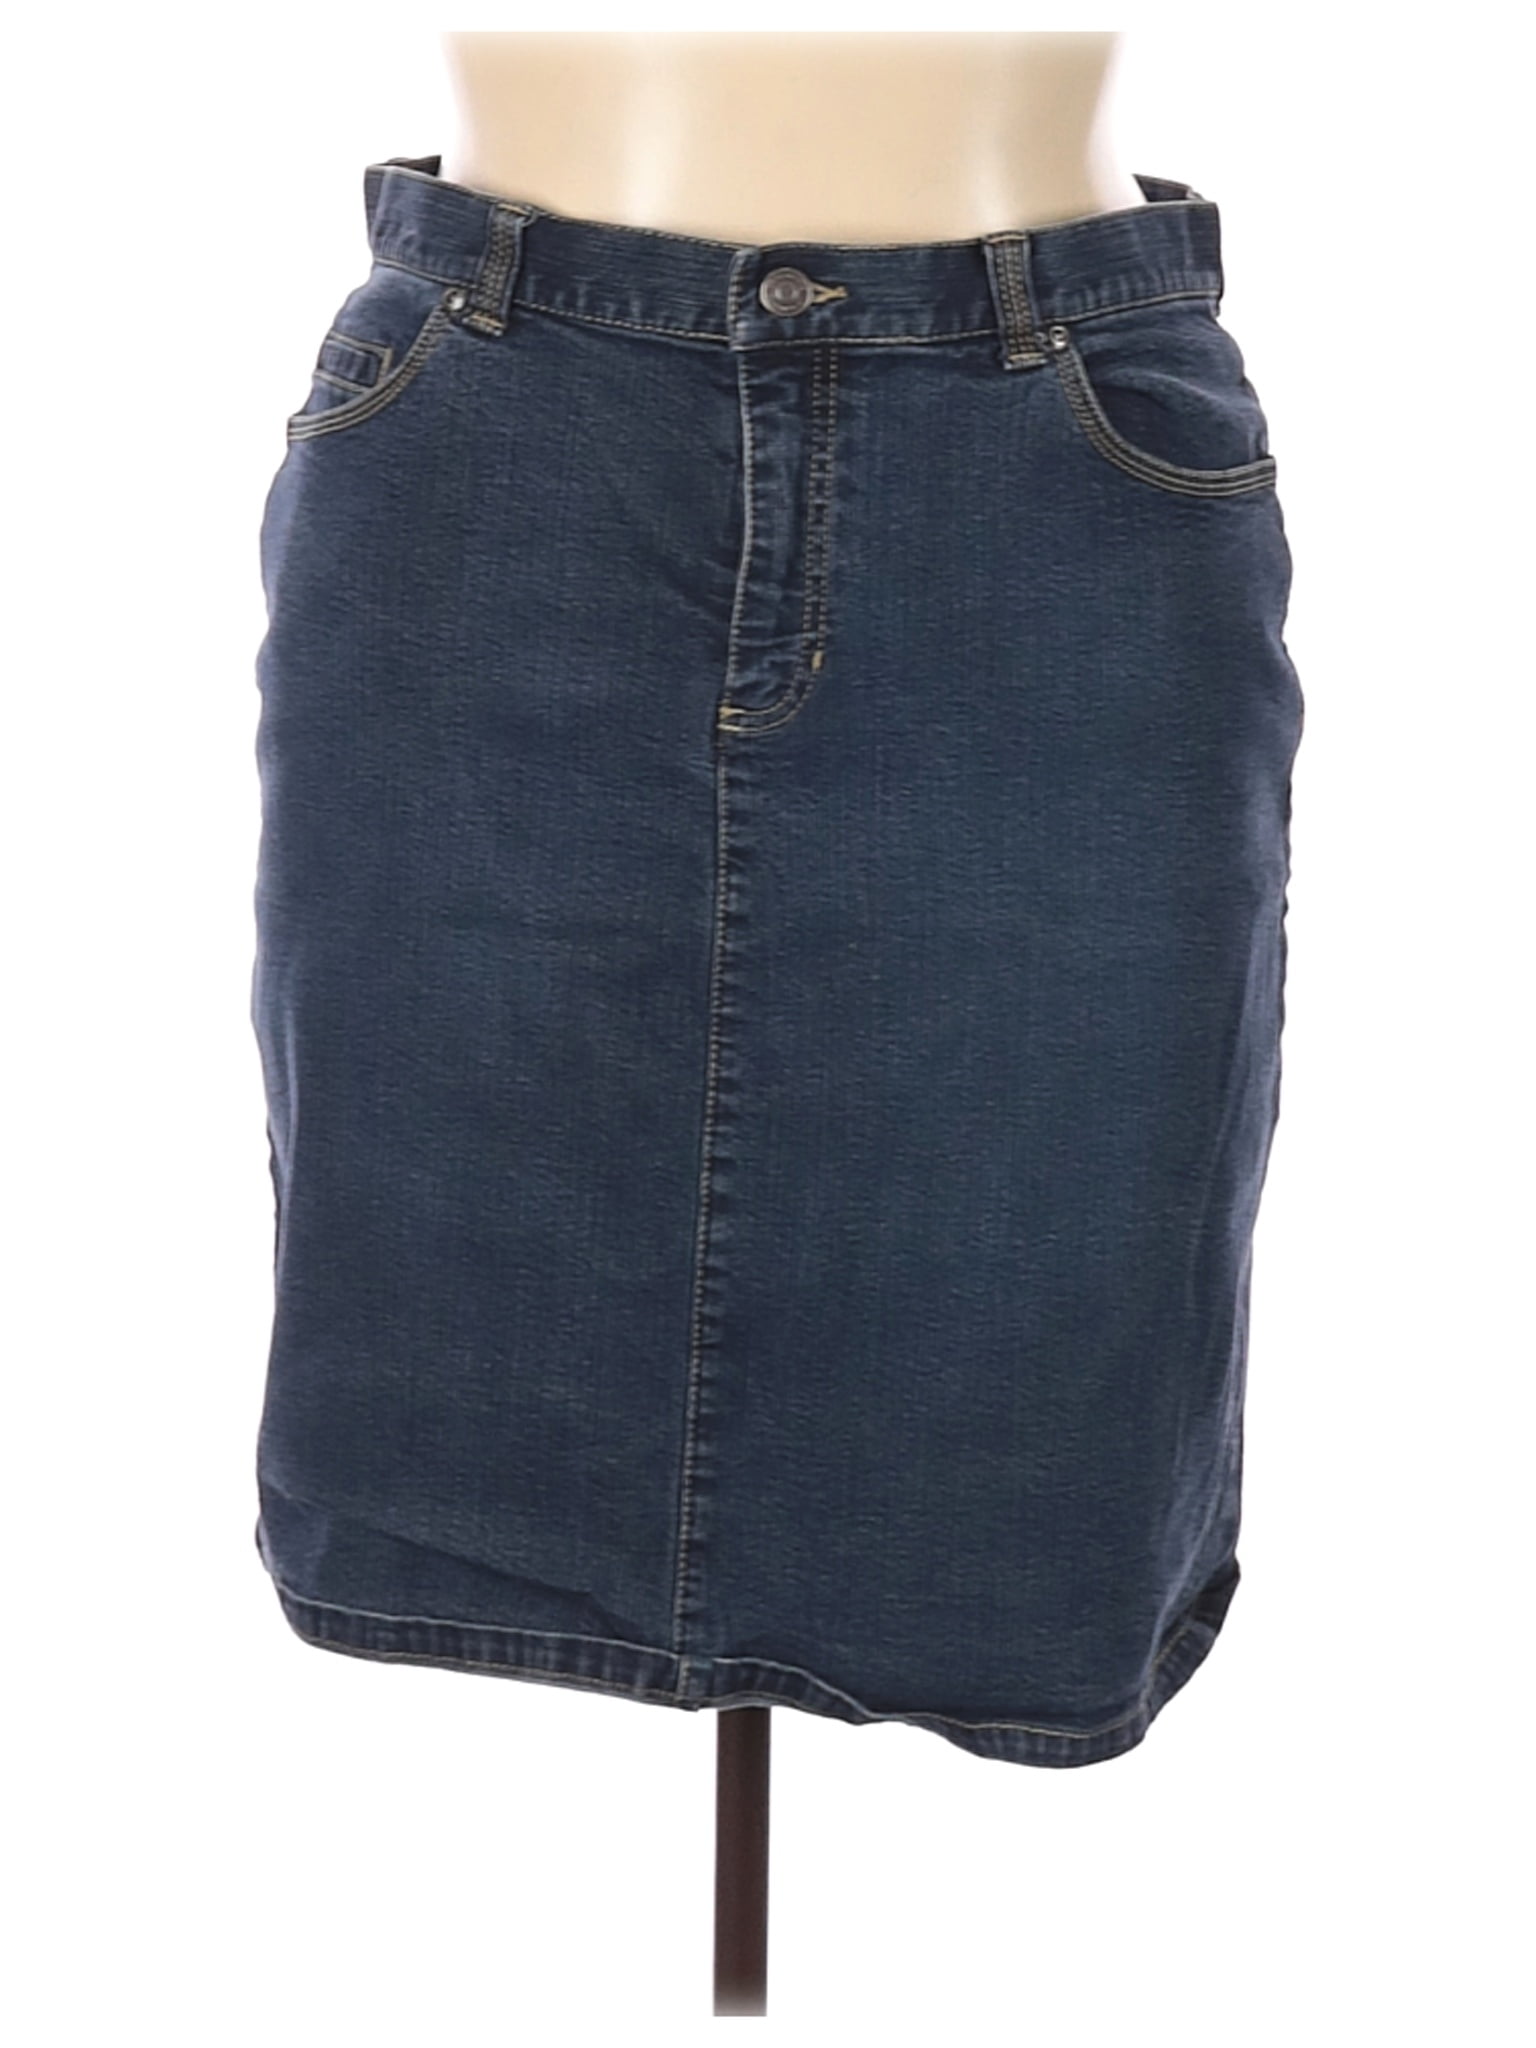 liz claiborne jean skirt